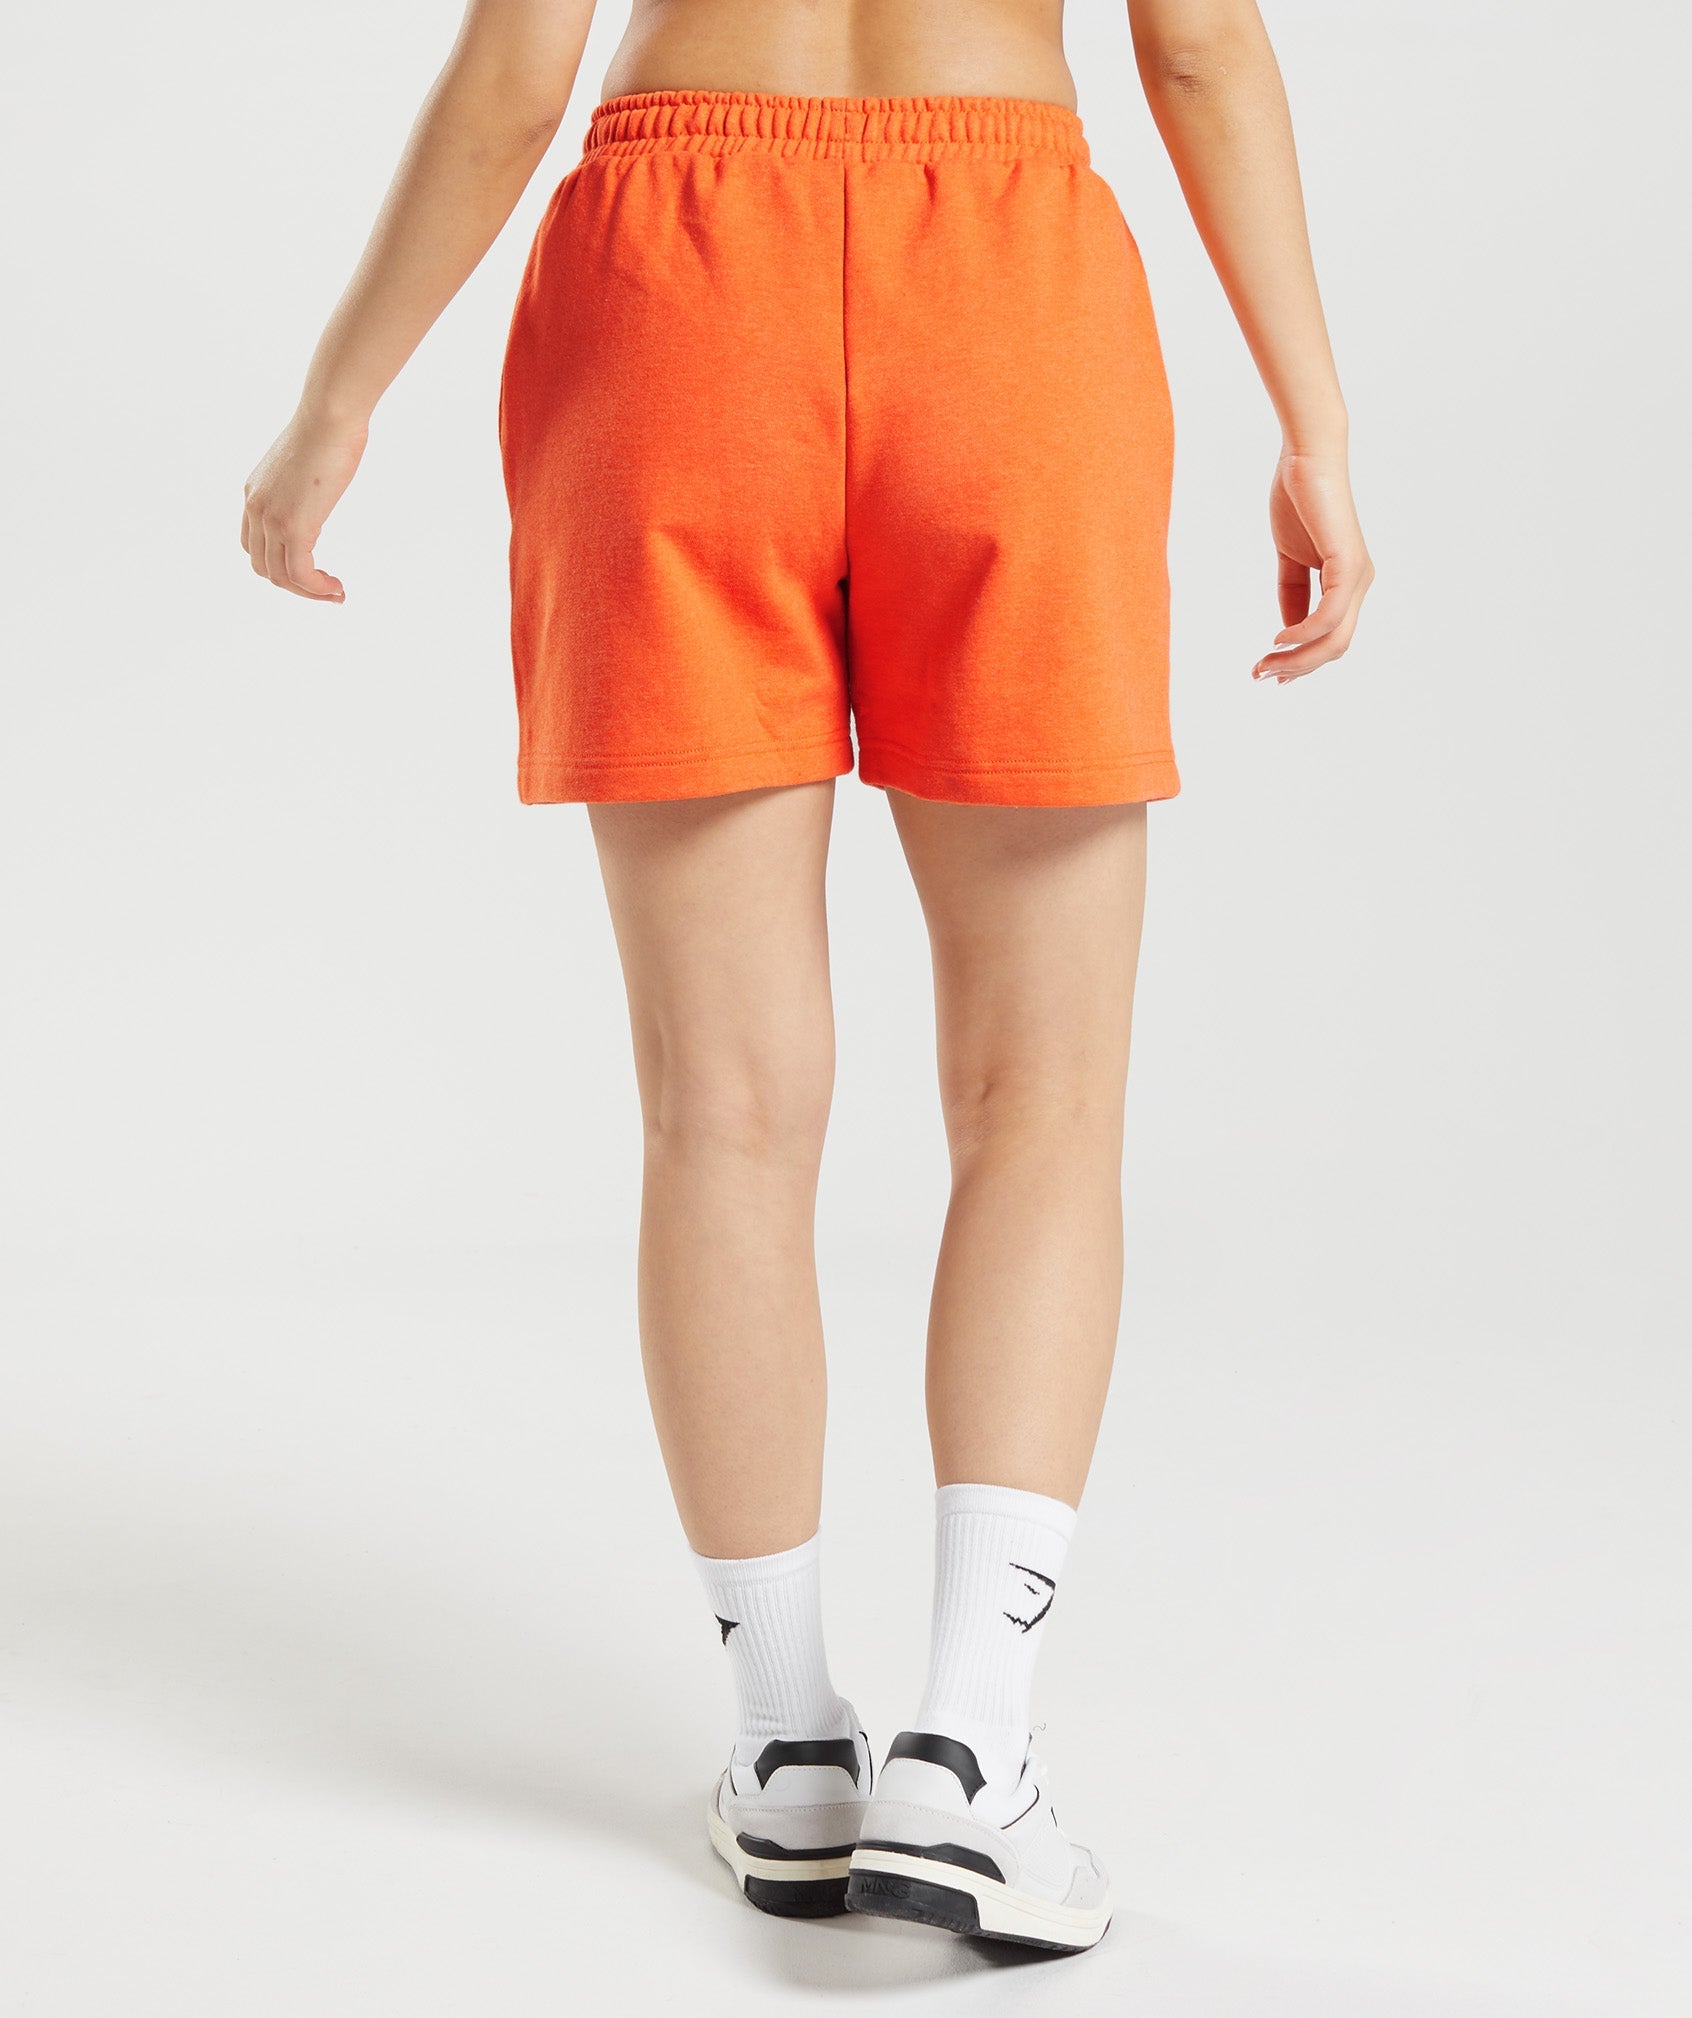 Gymshark Rest Day Sweats Shorts - Blaze Orange Marl